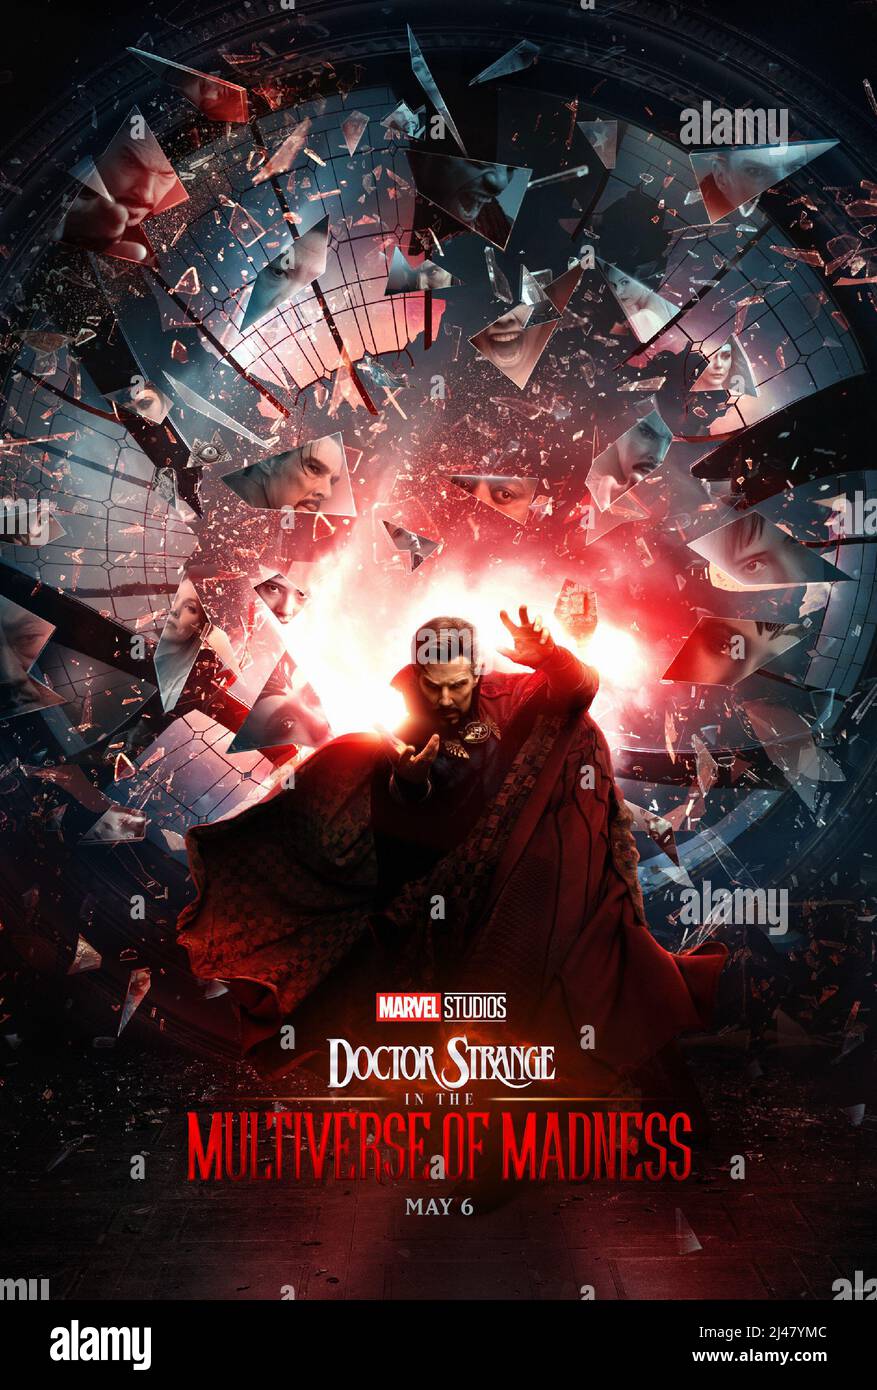 Slideshow: Doctor Strange: 3 New Posters